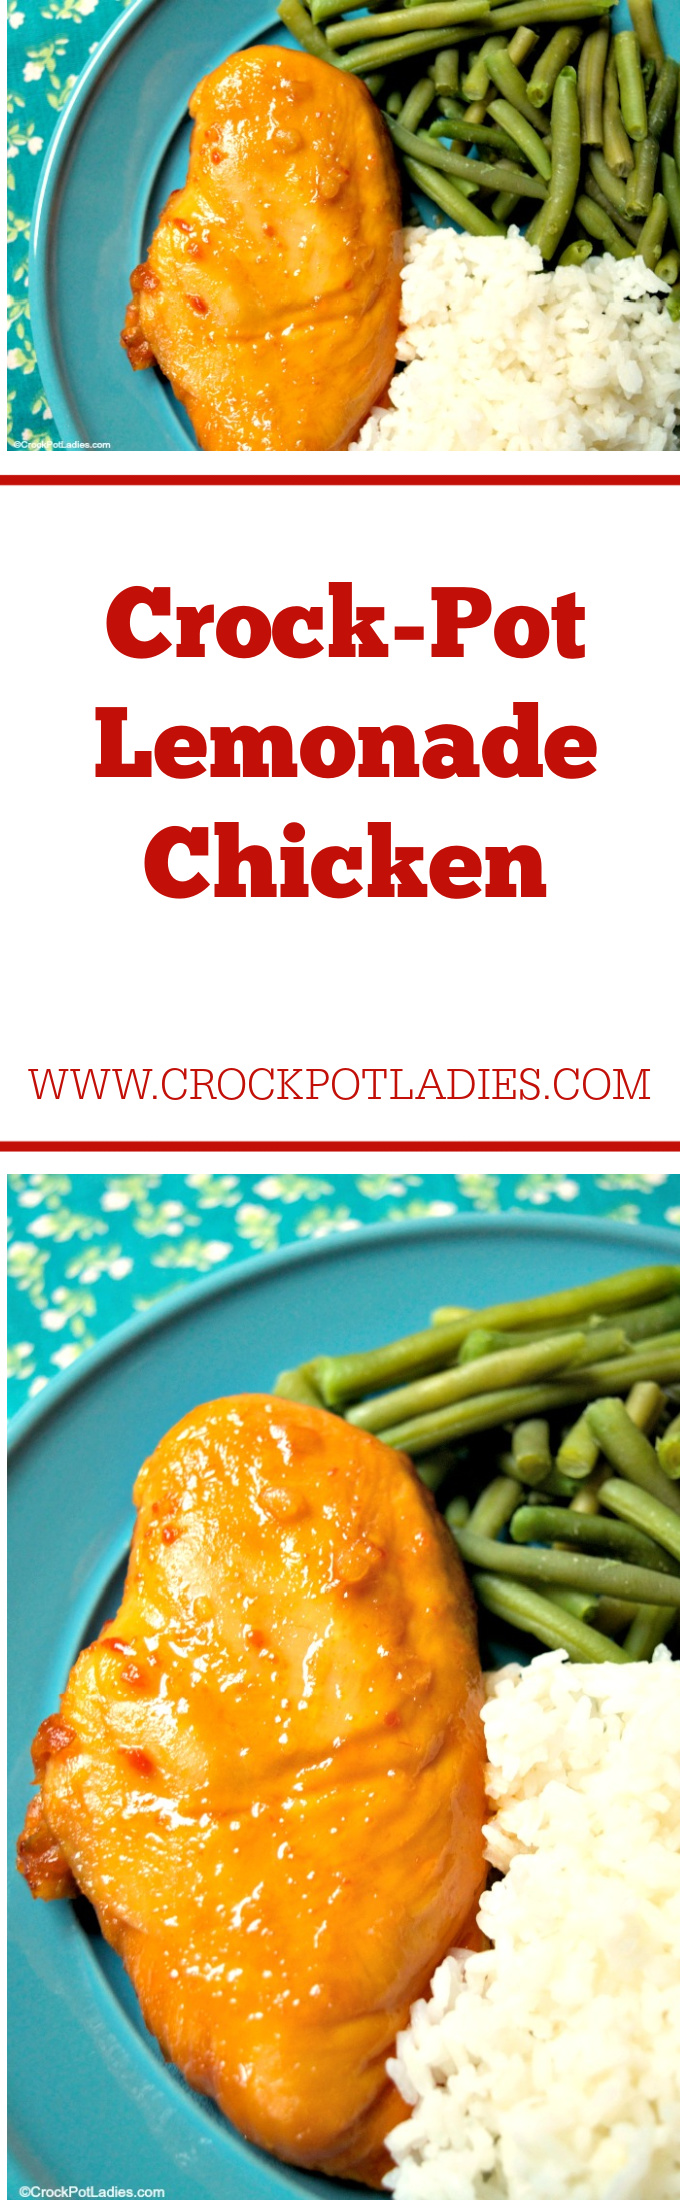 Crock-Pot Lemonade Chicken